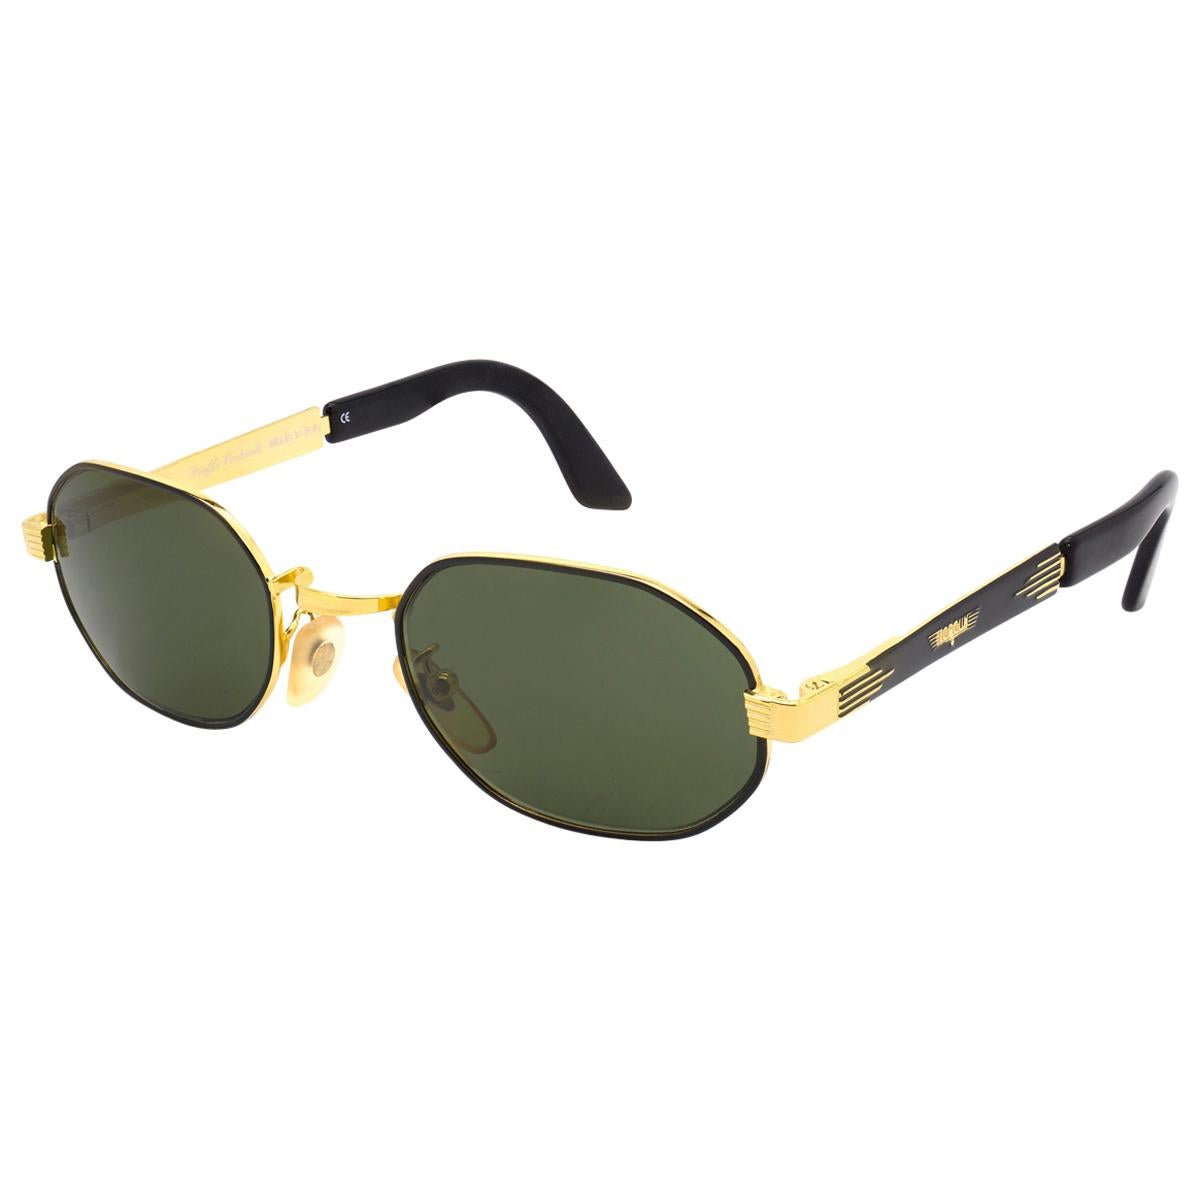 Top Gun hexagonal vintage sunglasses, ITALY 90s For Sale